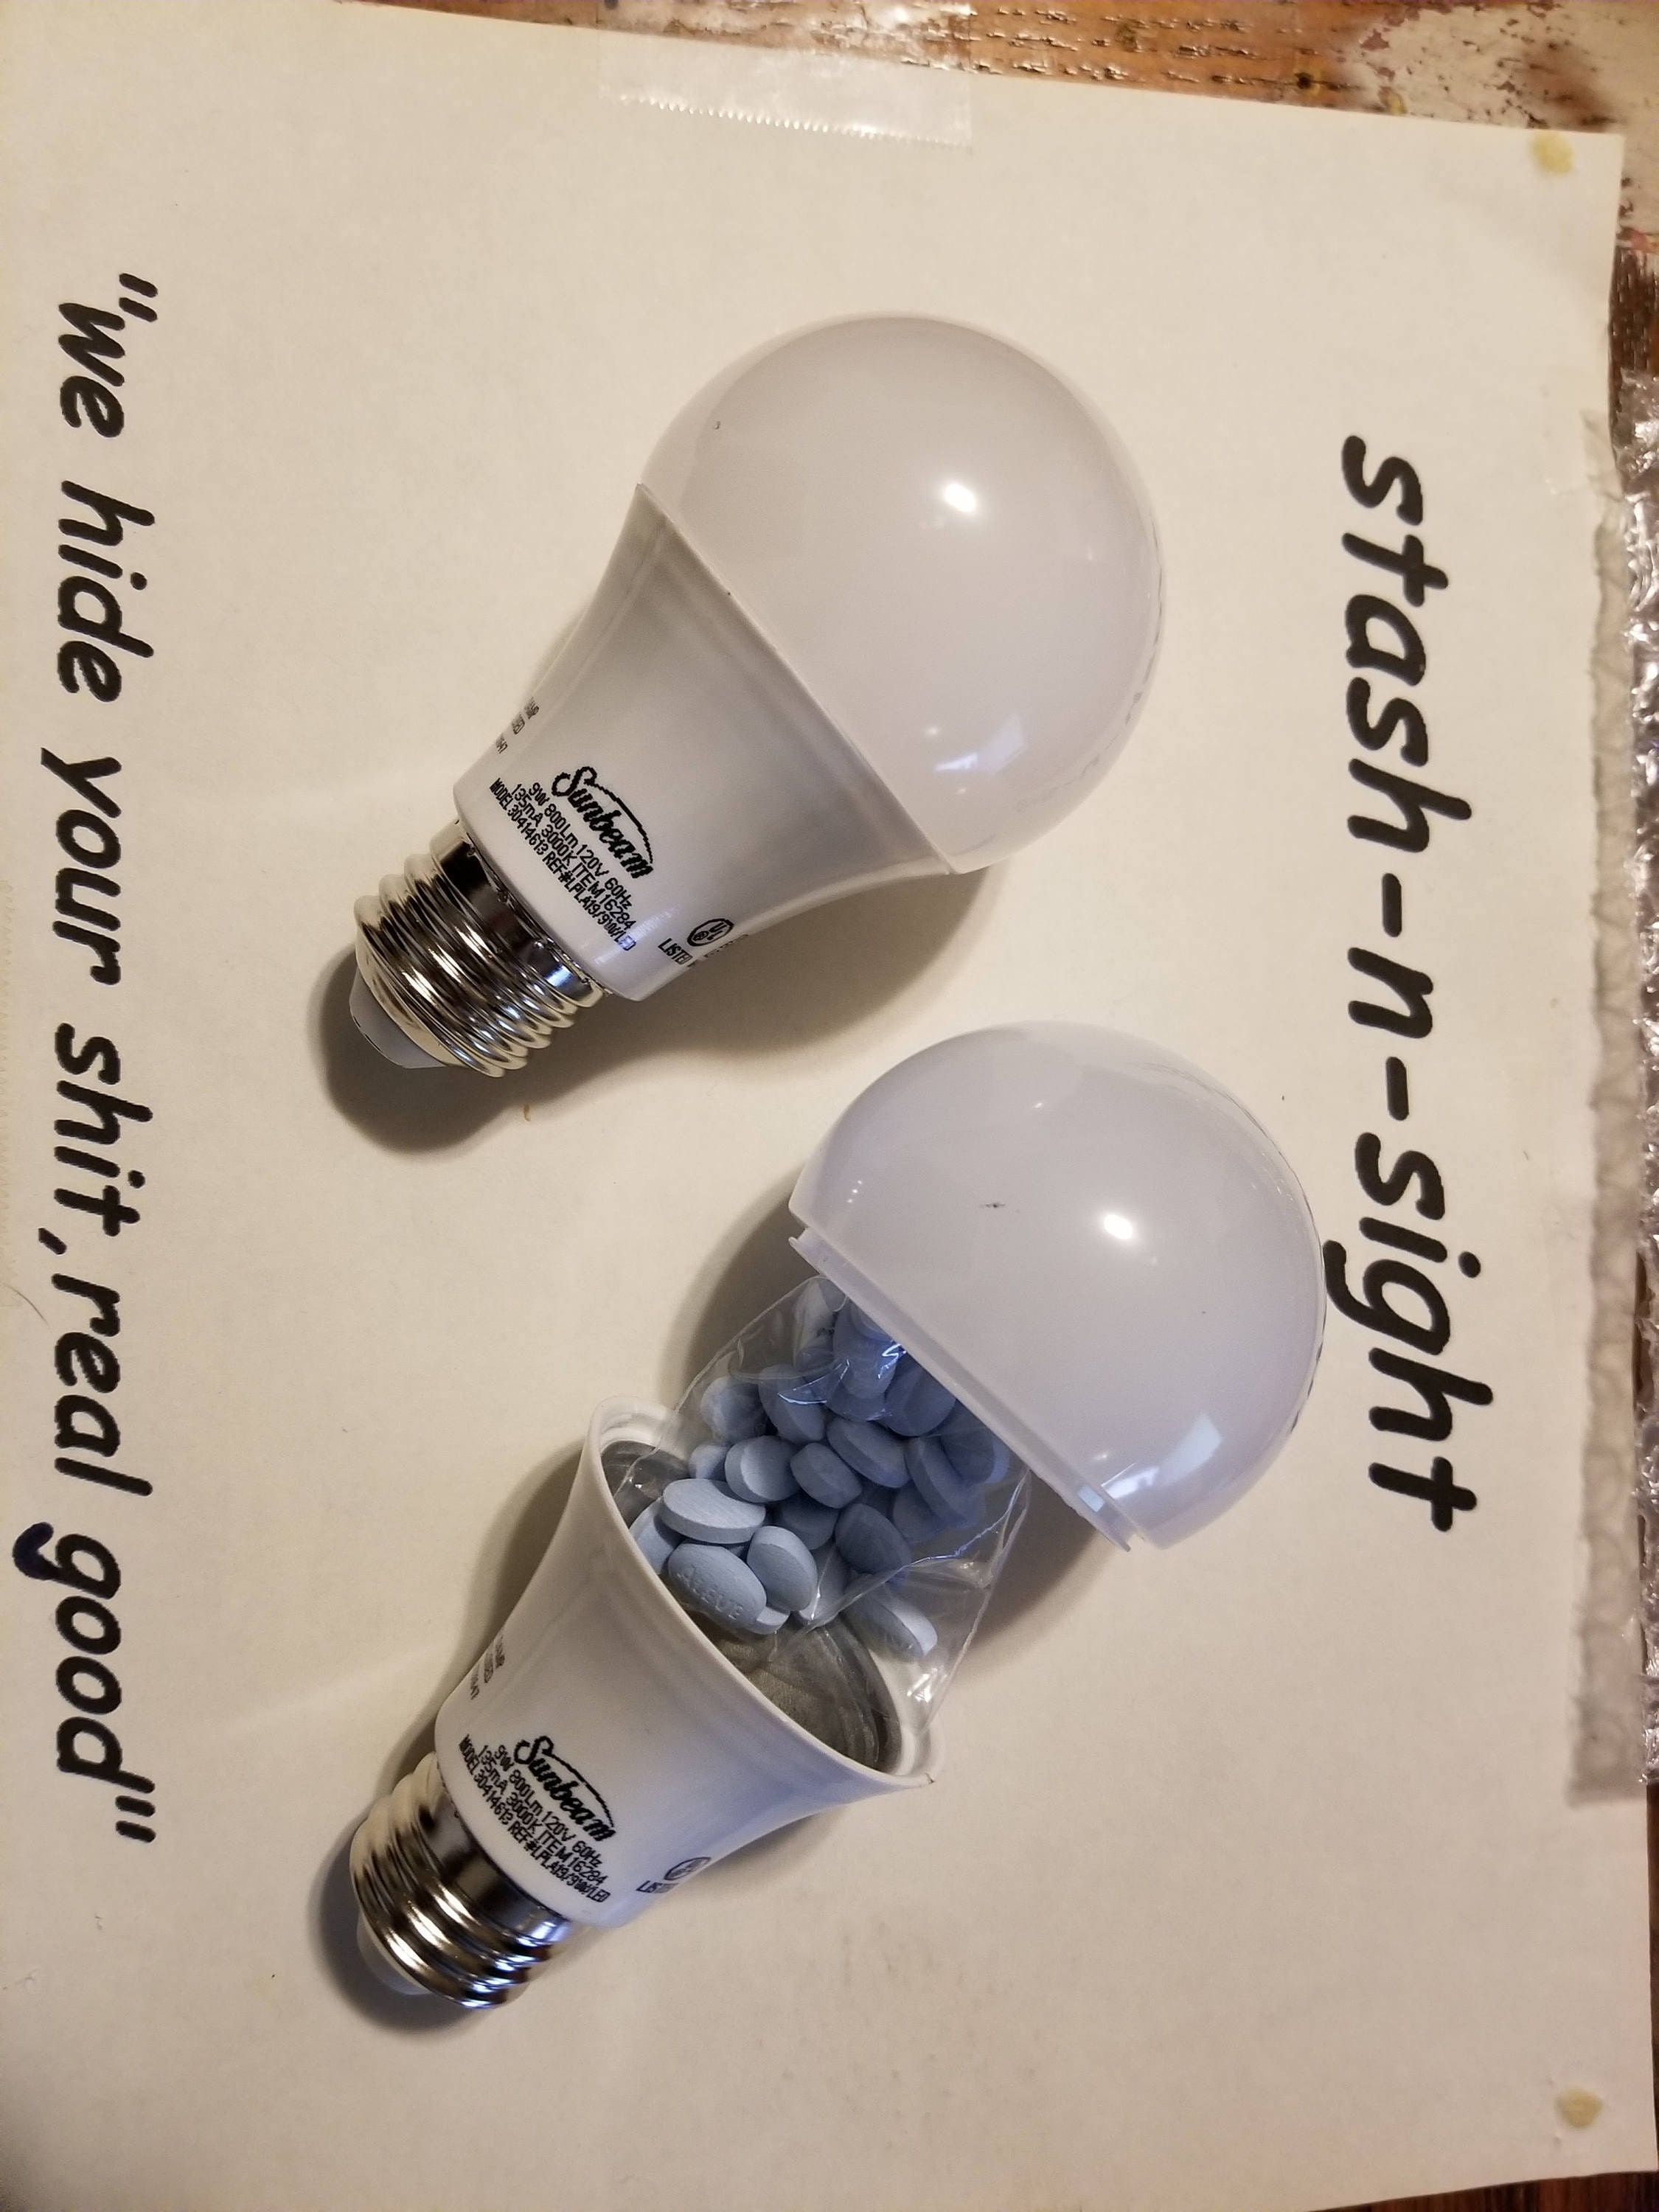 Fake light bulb secret stash can-Hidden compartment ...